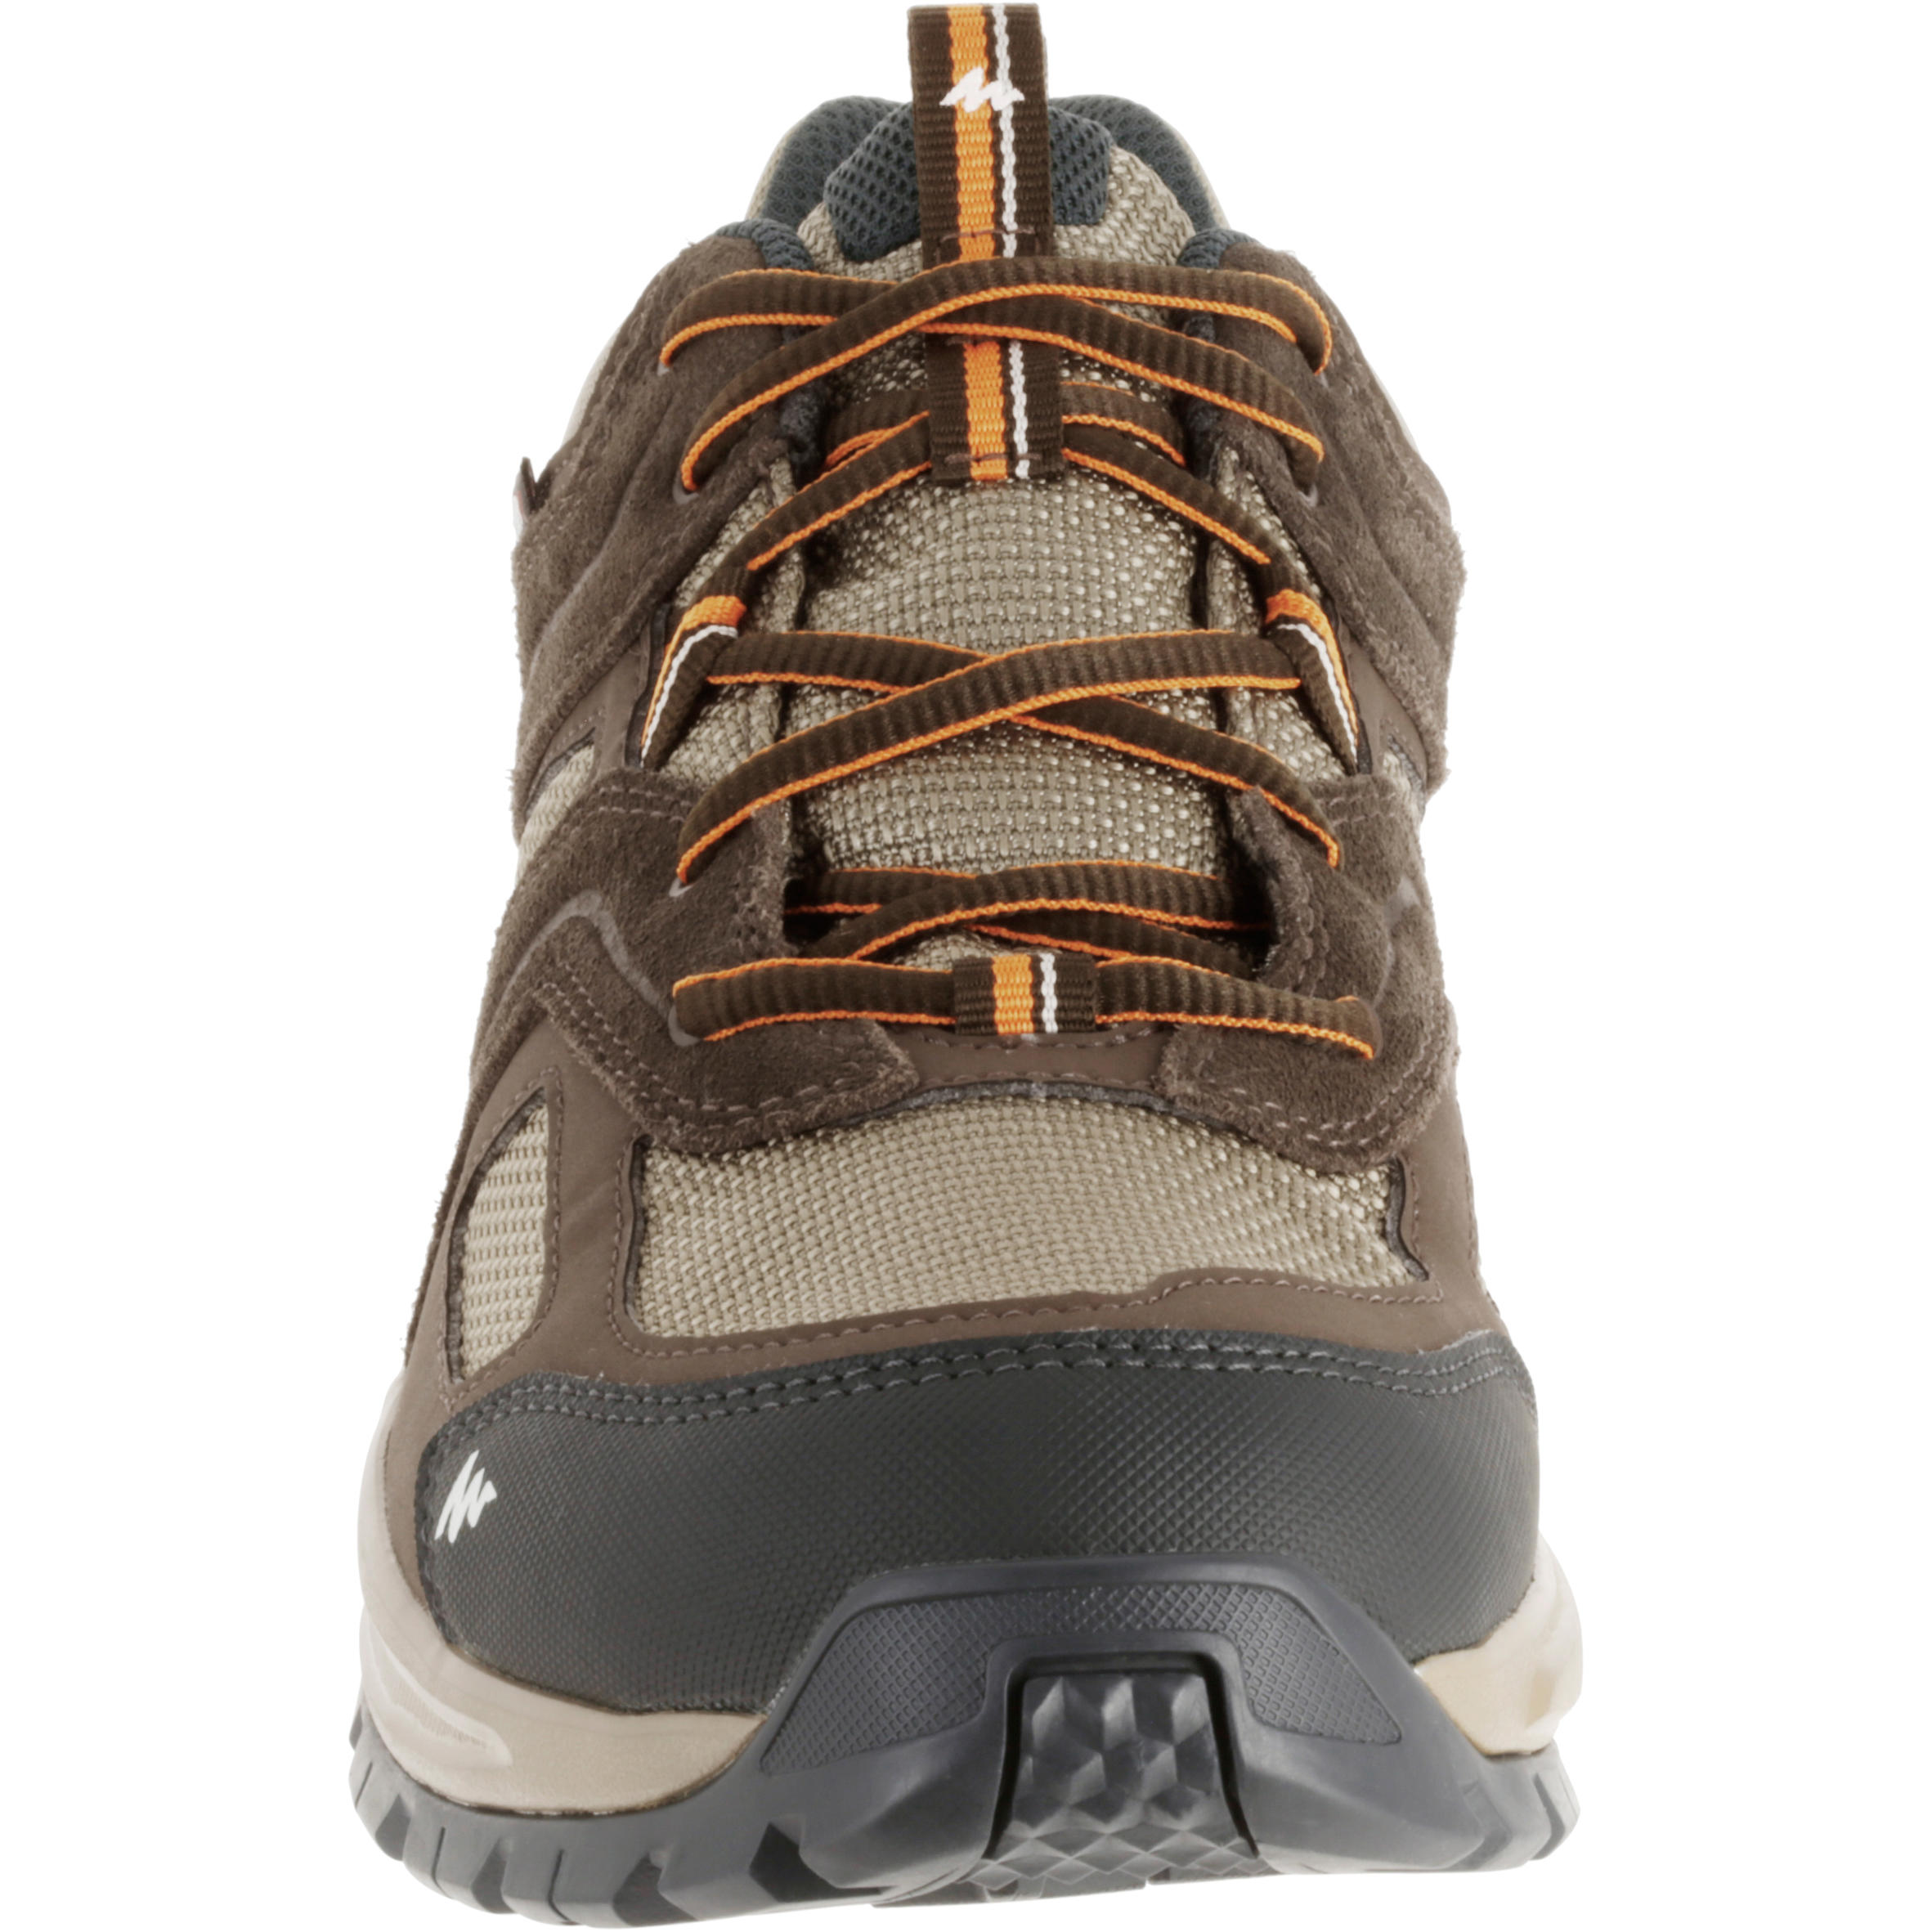 Forclaz 100 Male Waterproof Hiking Boot - Brown 4/13